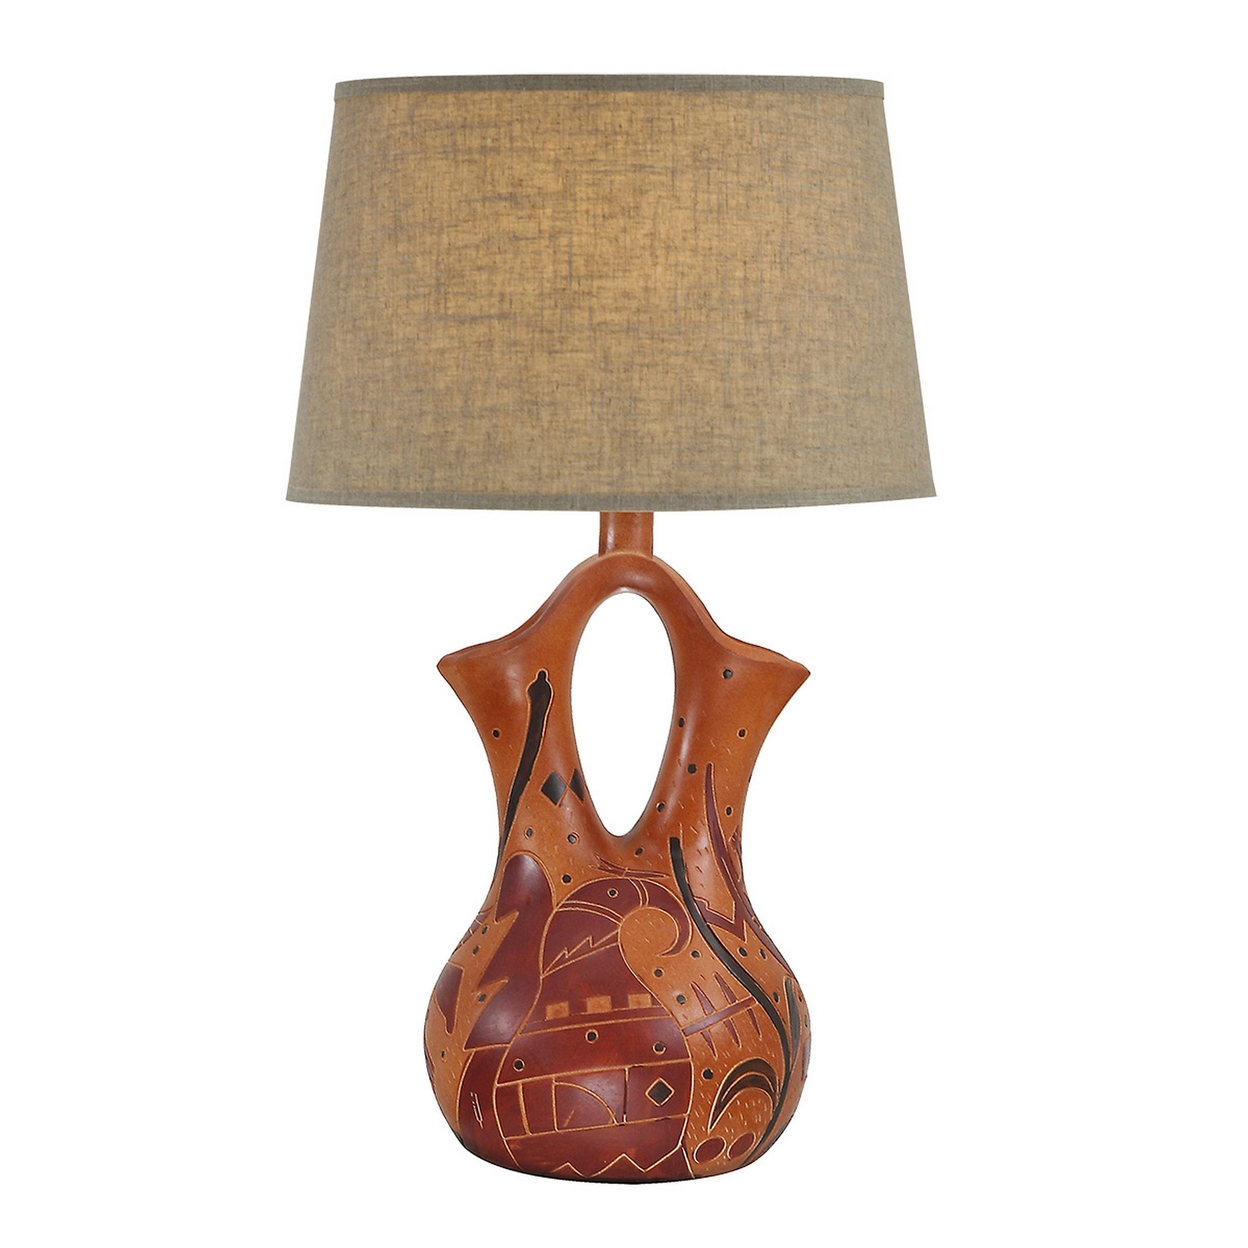 Figo 30 Inch Table Lamp, Curved Body, Flared Design, Beige, Red Orange - Saltoro Sherpi